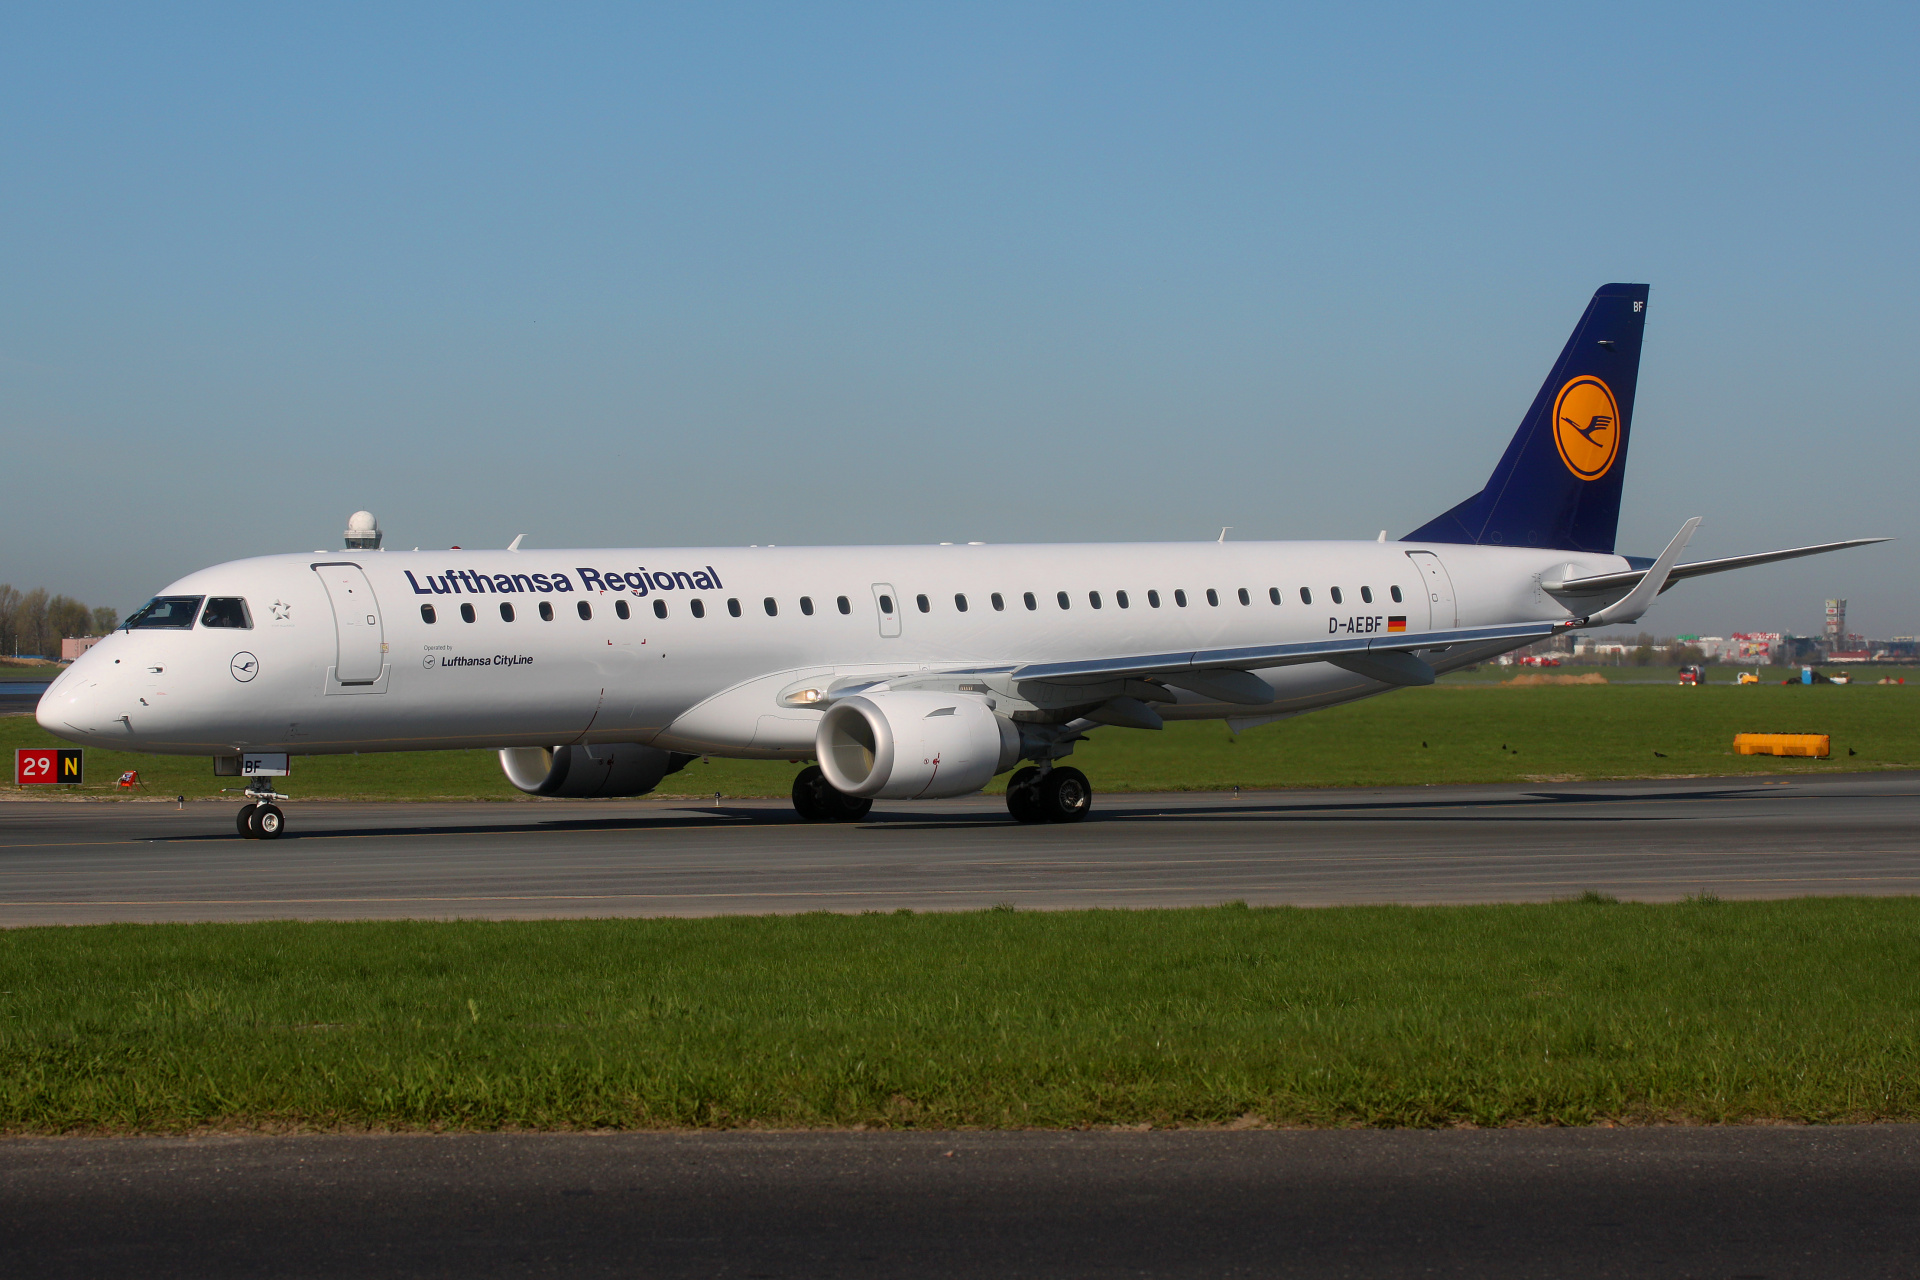 D-AEBF (Lufthansa CityLine) (Aircraft » EPWA Spotting » Embraer E195 » Lufthansa Regional)